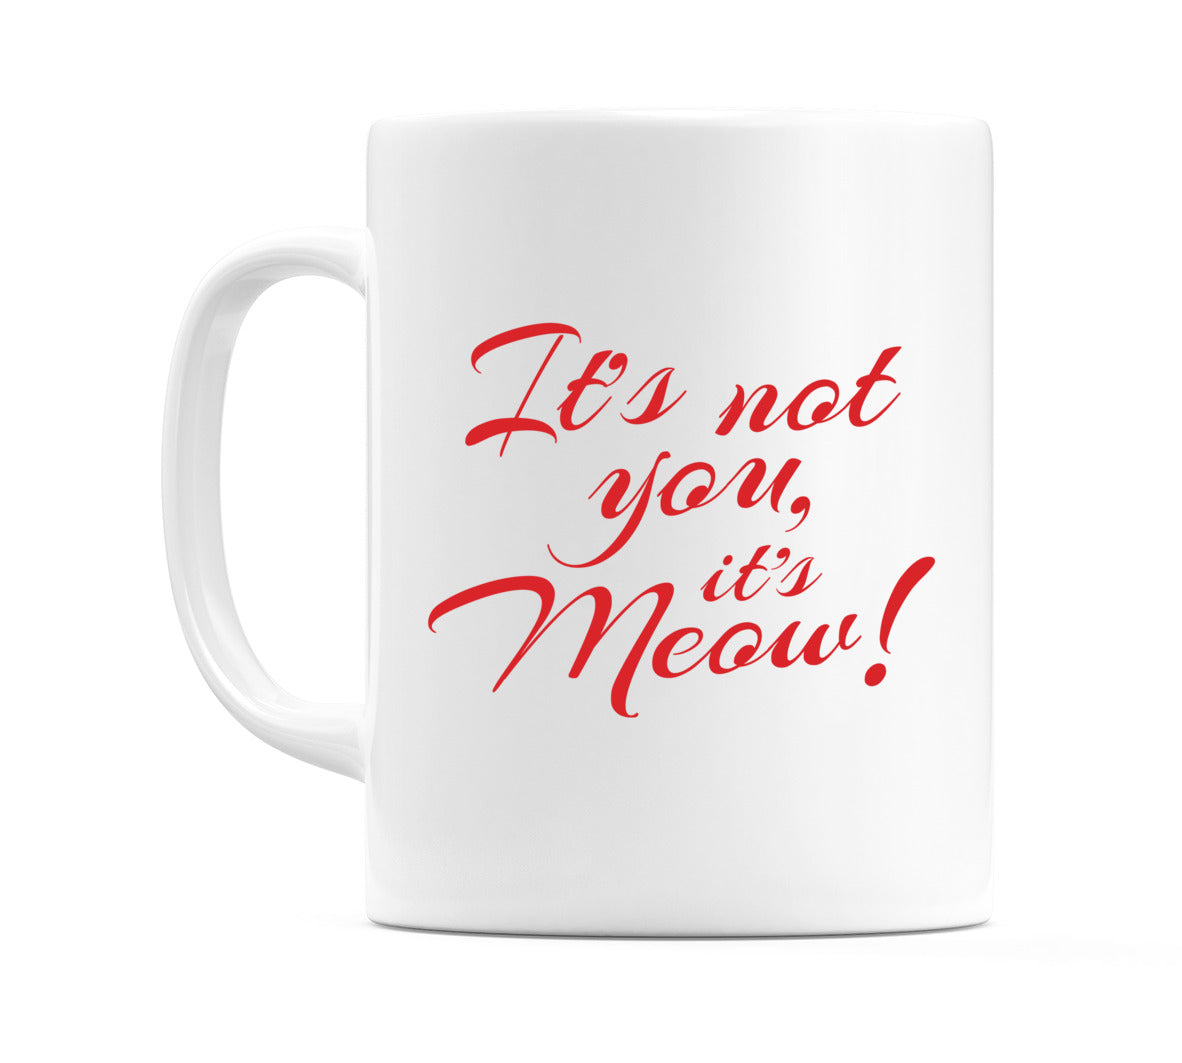 It's not you, it's meow! Mug